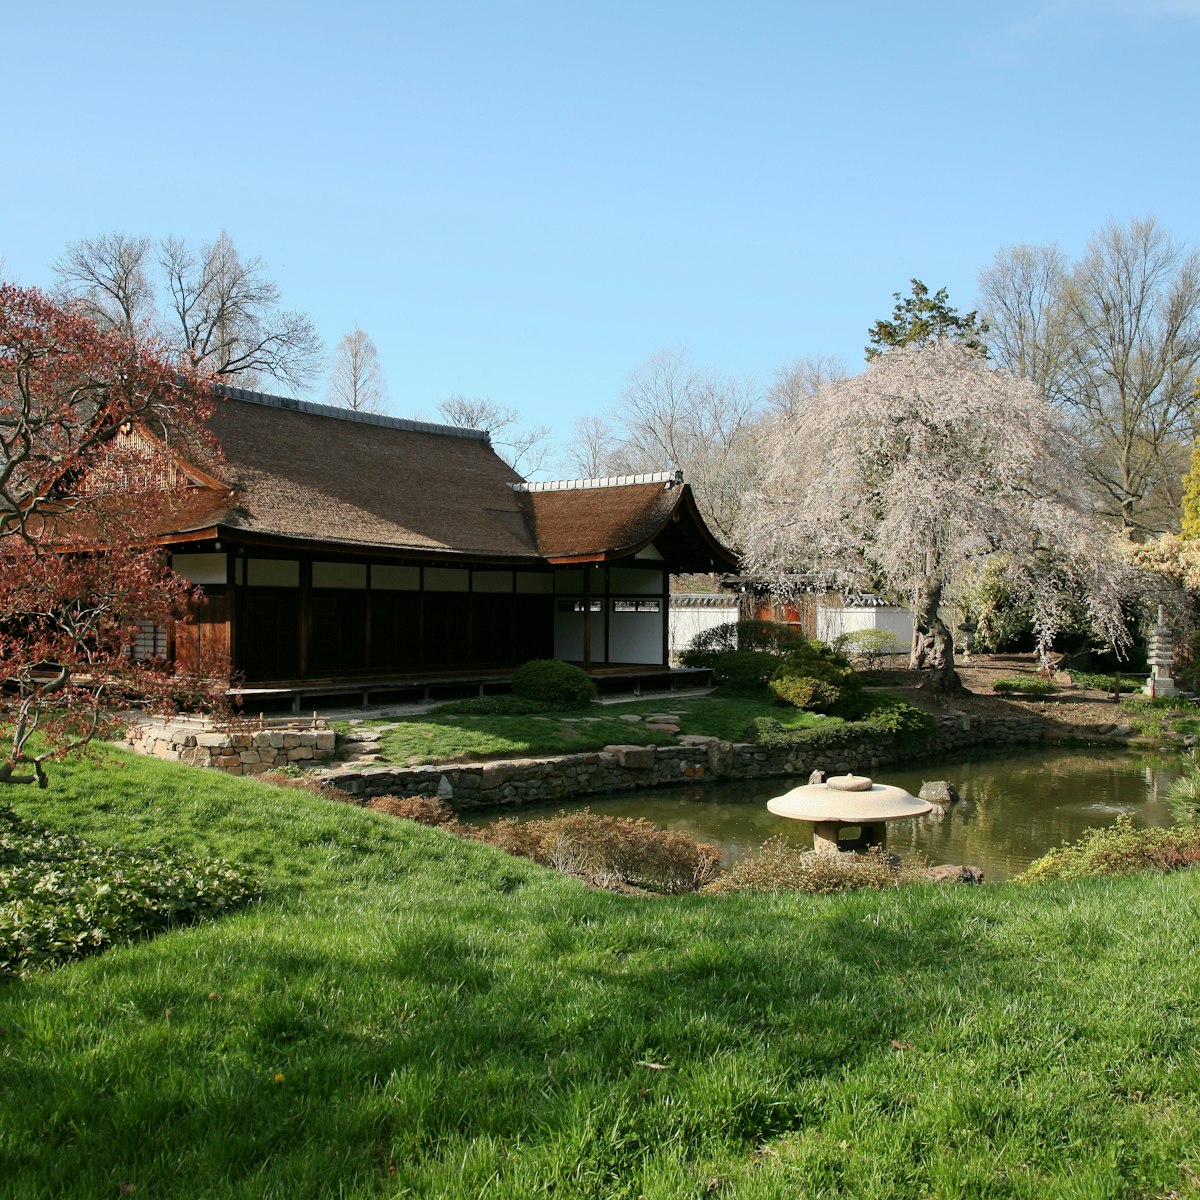 Shofuso Japanese House and Garden in spring, Philadelphia, PA.